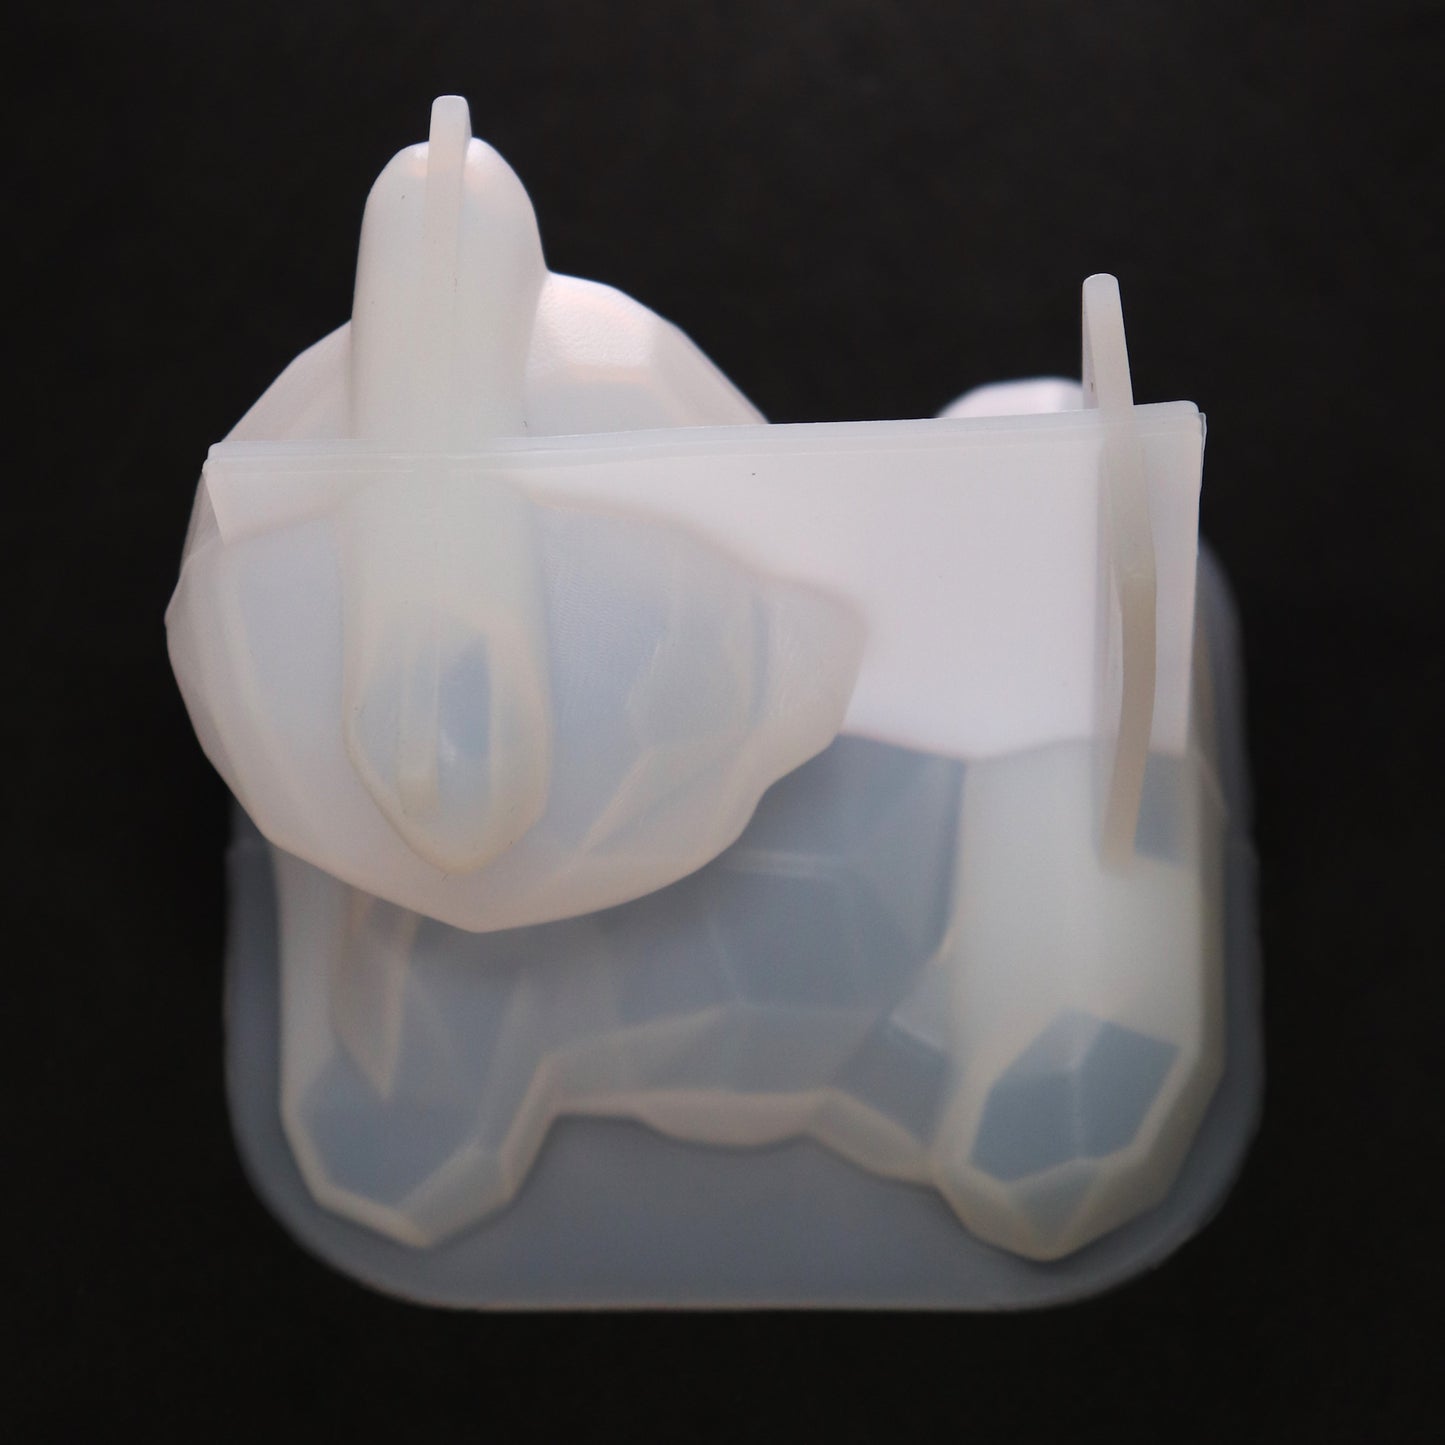 Silikonform 3D Teddybär Bär Gießform für Resin, Raysin ca. 9 cm